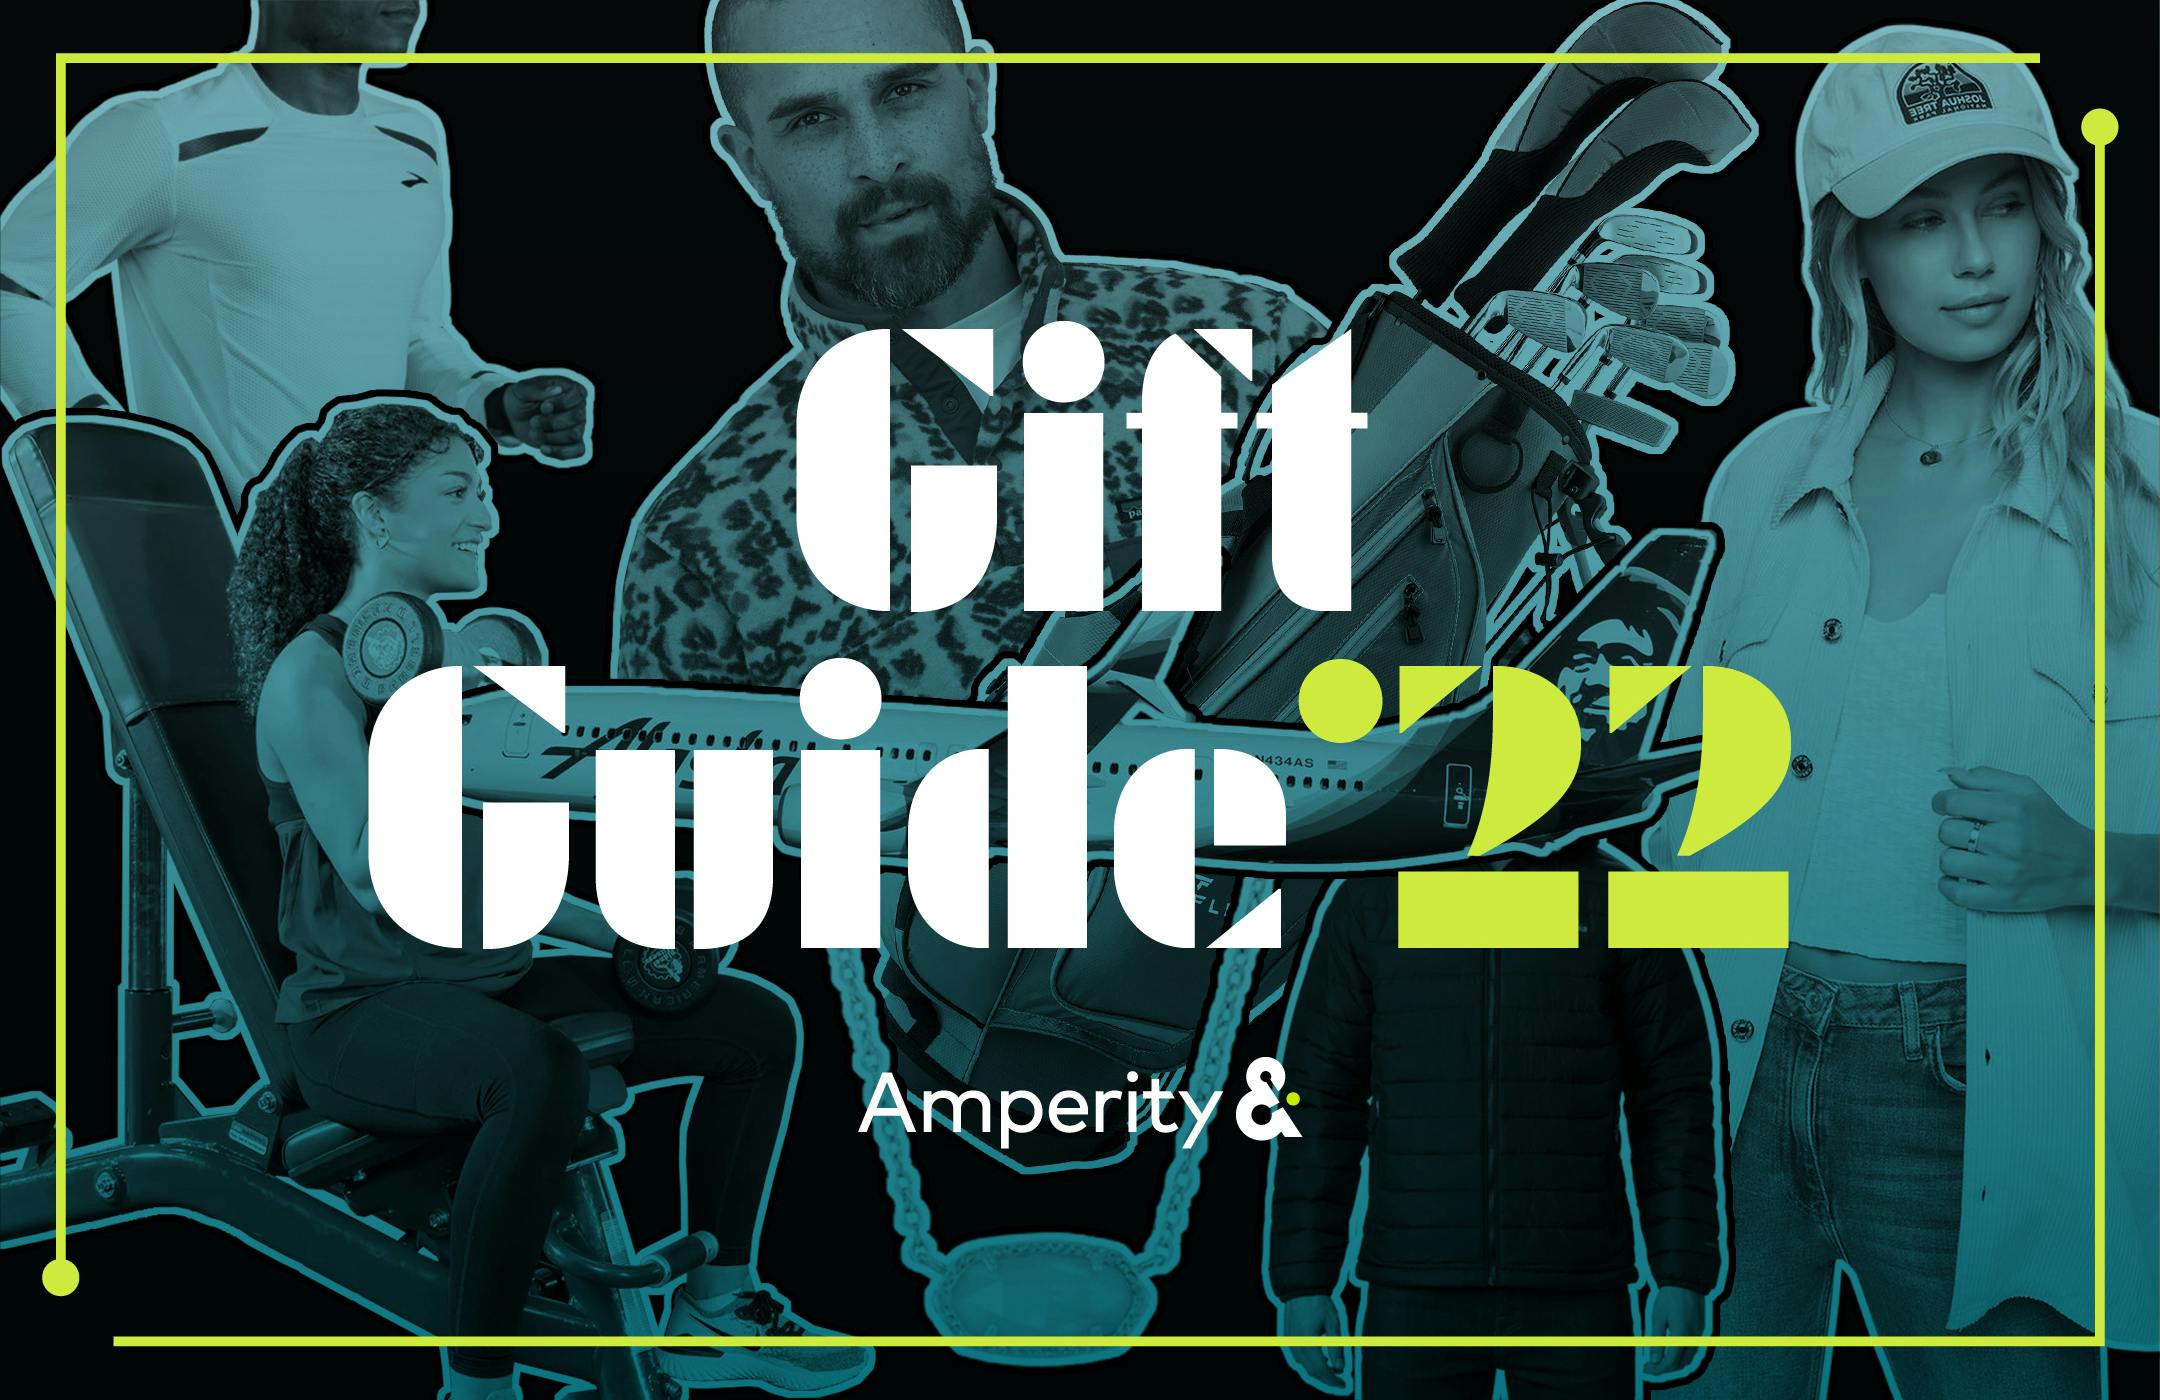 Gift Guide '21